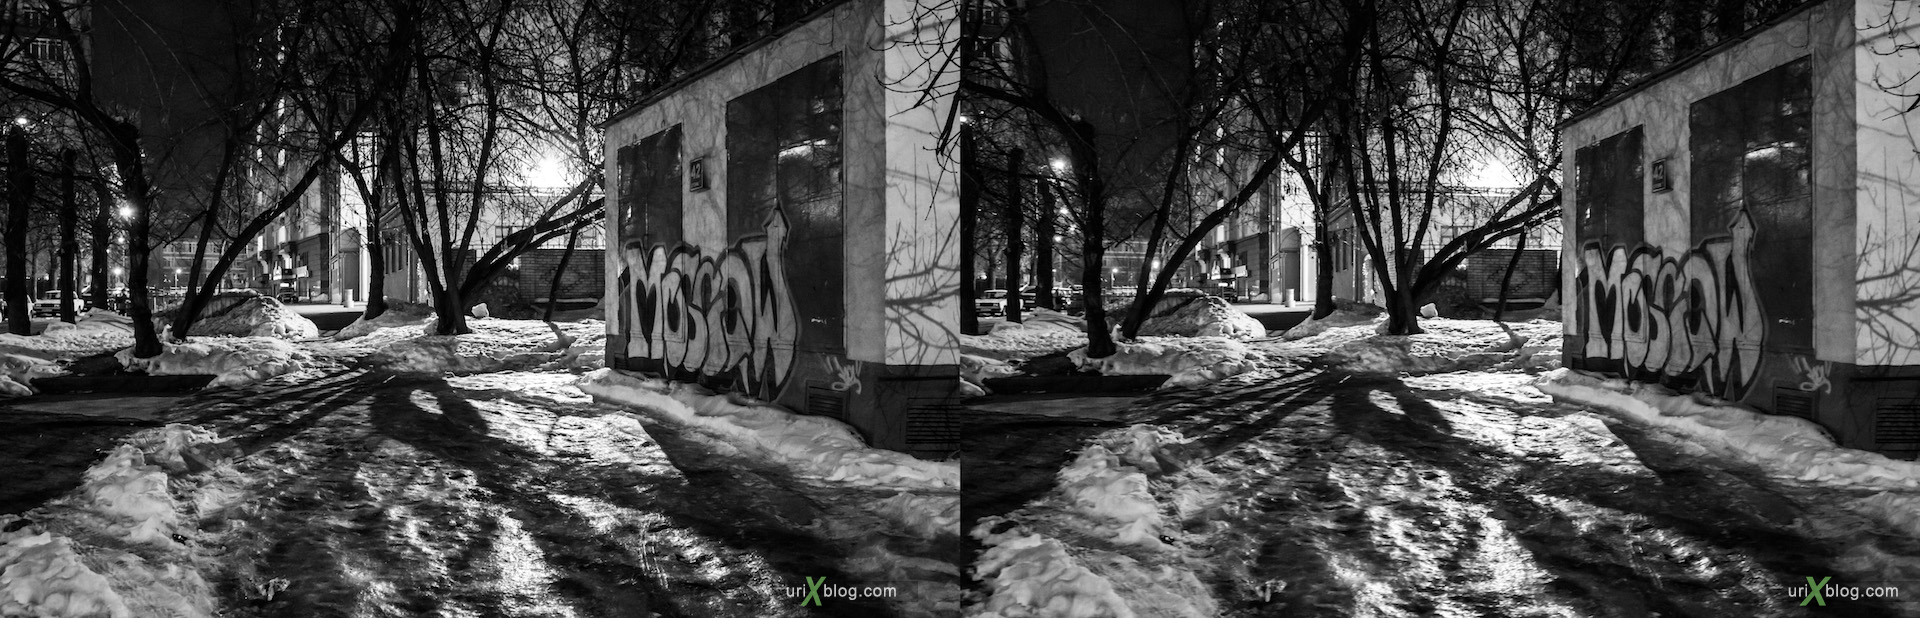 2013, Buzheninova street, night, evening, Moscow, Russia, winter, snow, dust, lantern, tree, building, 3D, stereo pair, cross-eyed, crossview, cross view stereo pair, stereoscopic